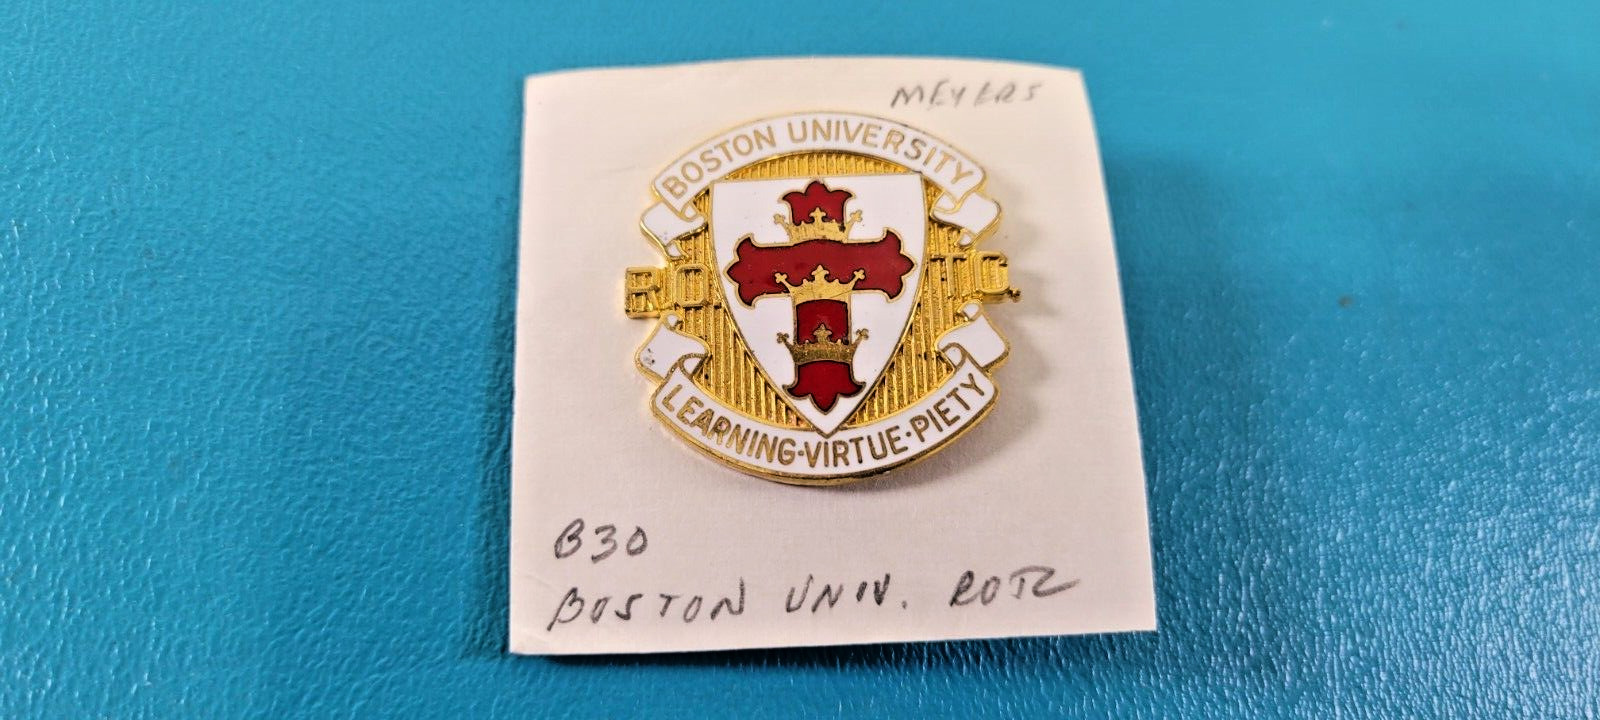 Vintage BU Boston University Army ROTC Medal N.S. Meyer Hallmark Pin Insignia